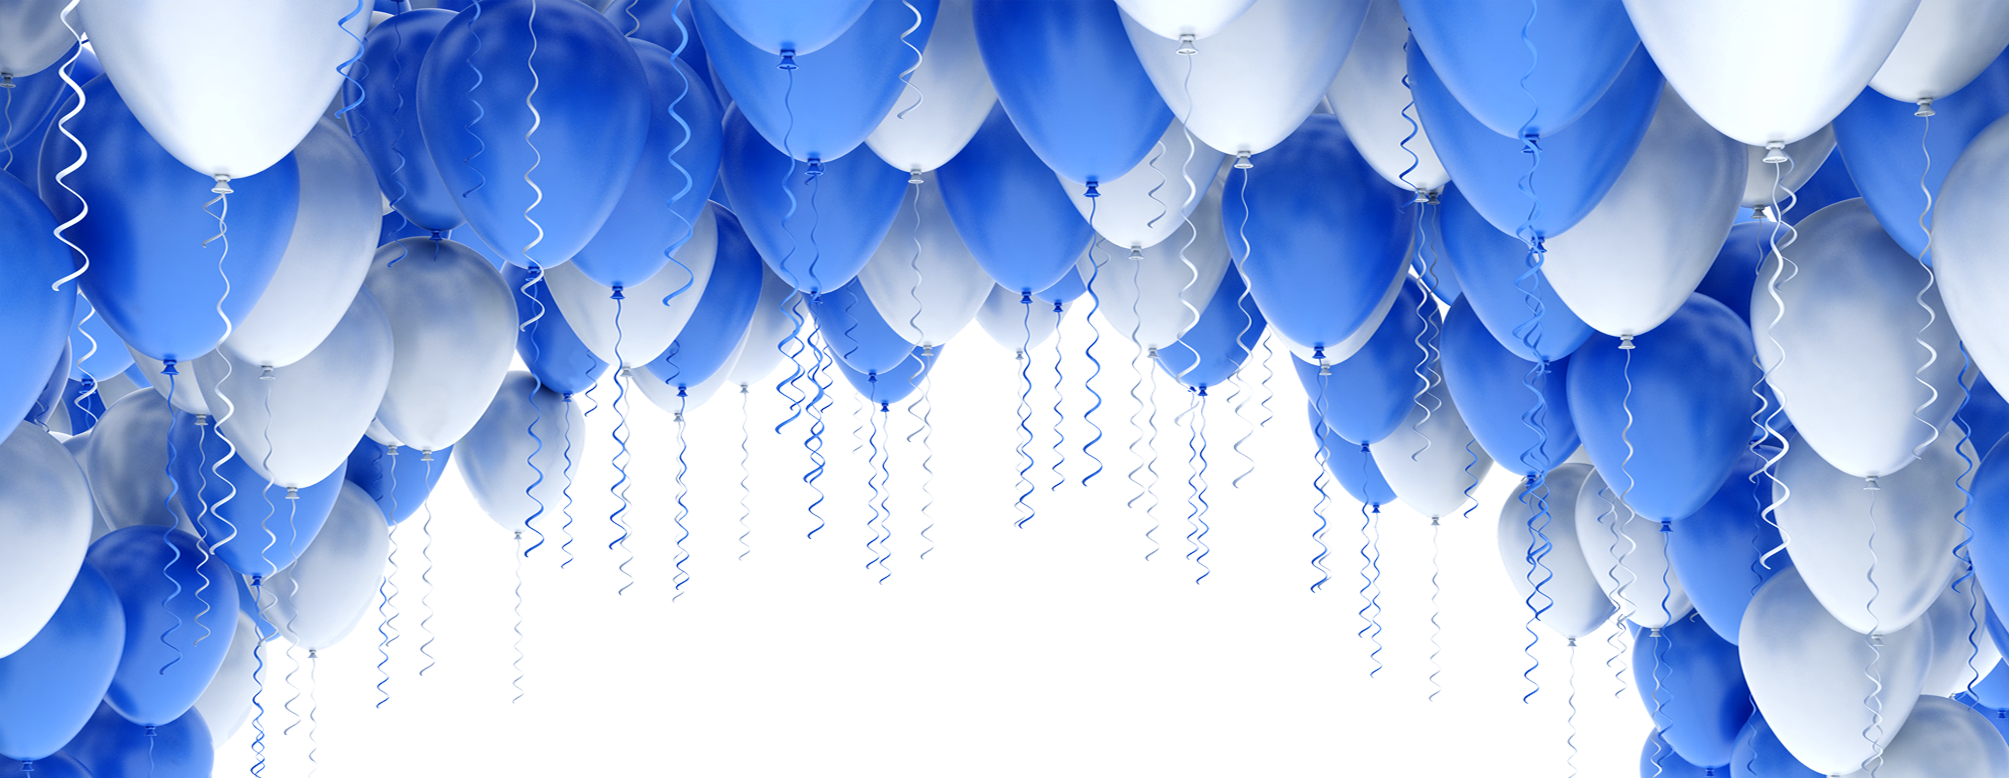 41715-blue-balloon-flying-birthday-stock.xchng-white-balloons - Atlanta